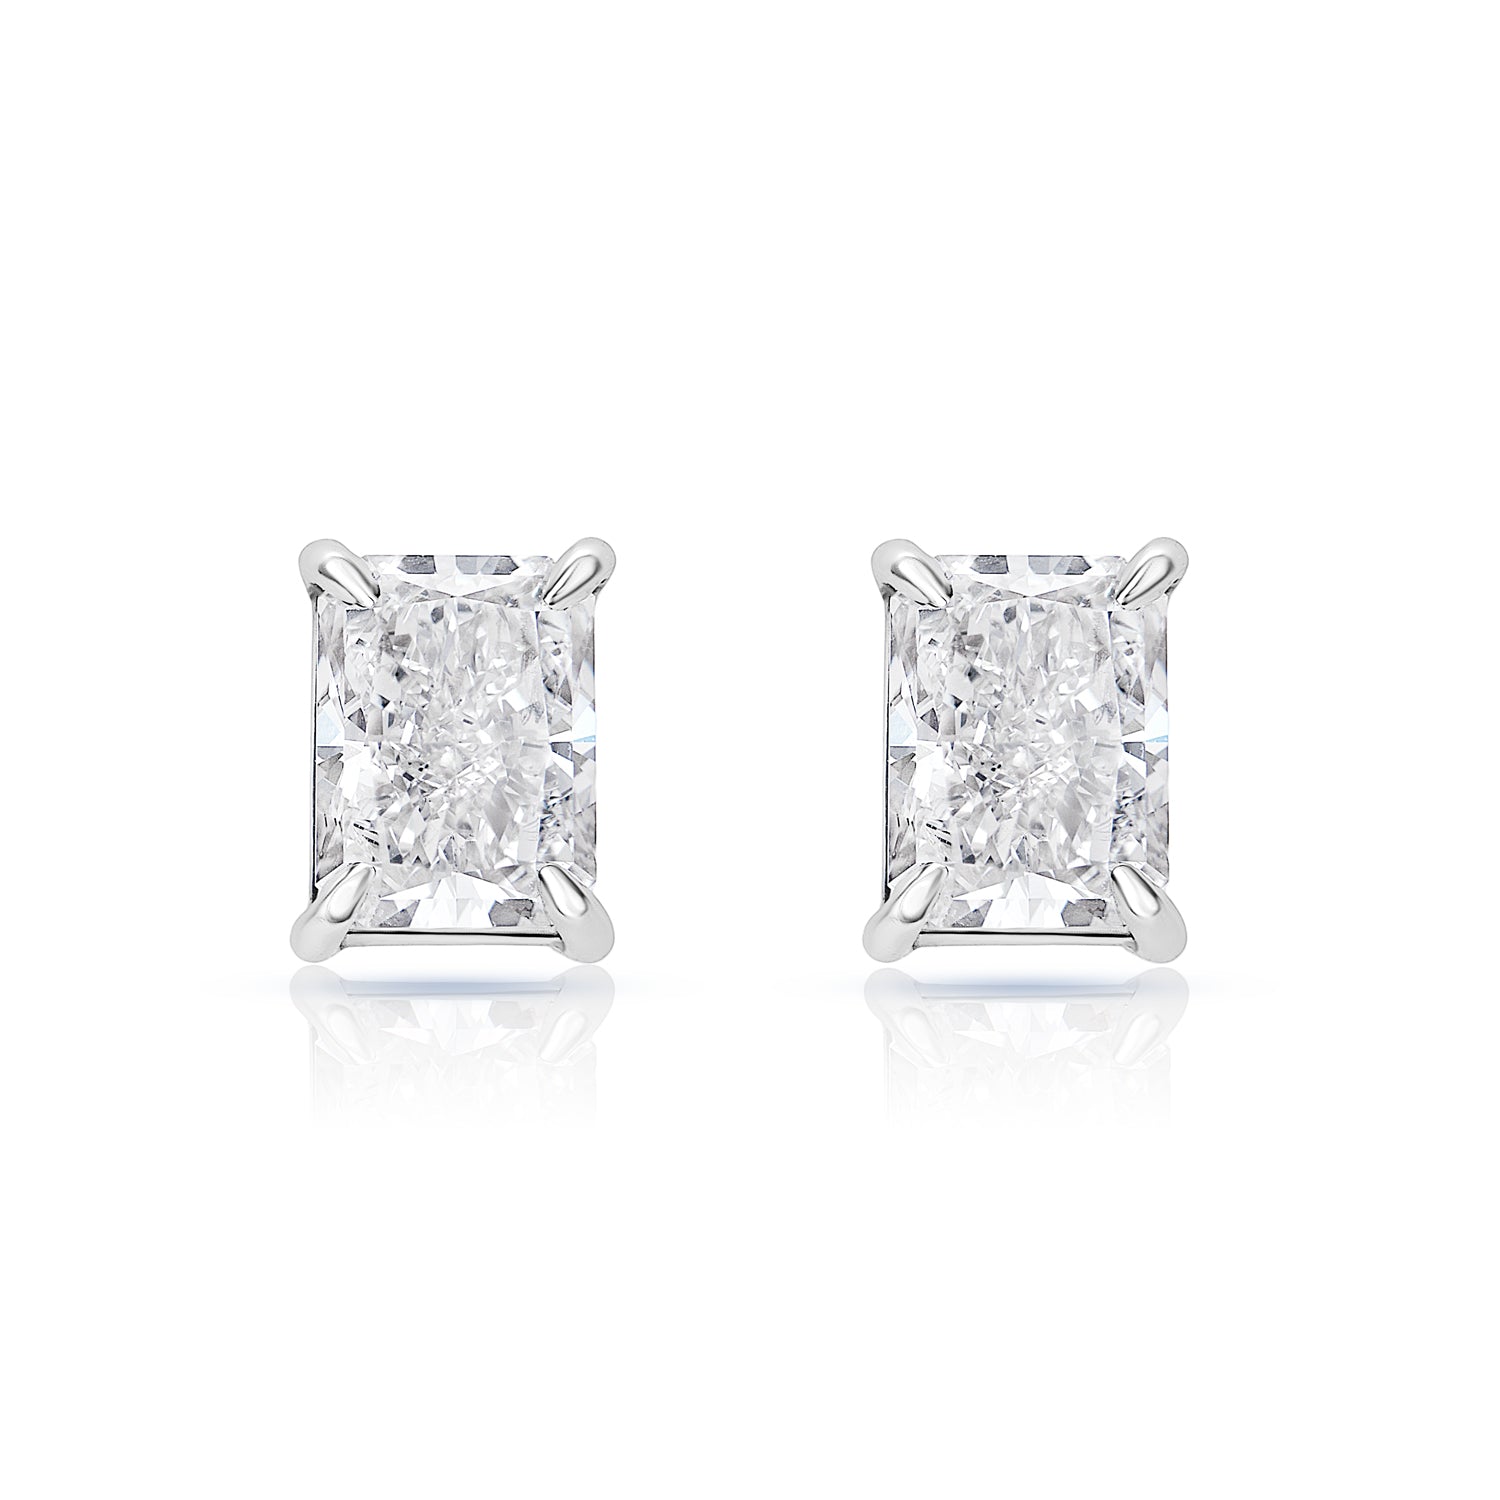 Lela 3 Carat Radiant Cut F - G VS1 - VS2 Lab Grown Diamond Stud Earrings in 14k White Gold Front View